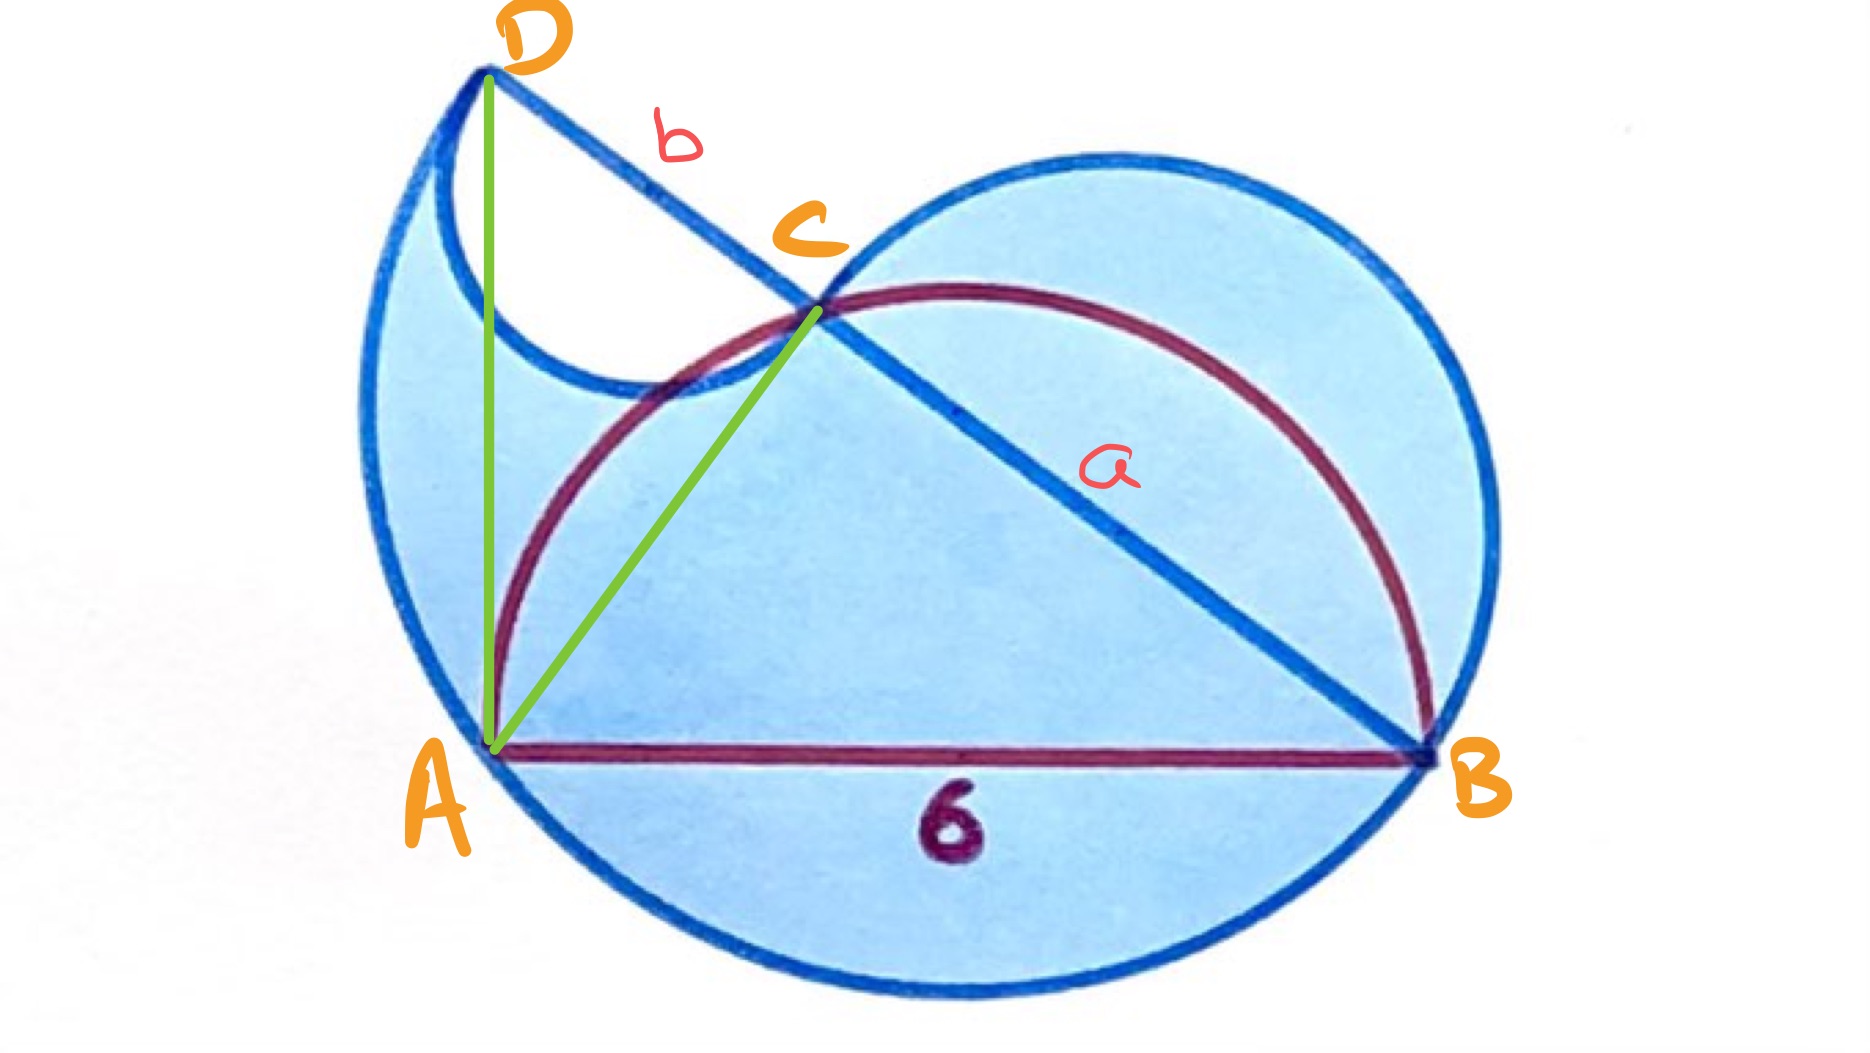 Multiple semi-circles iii labelled